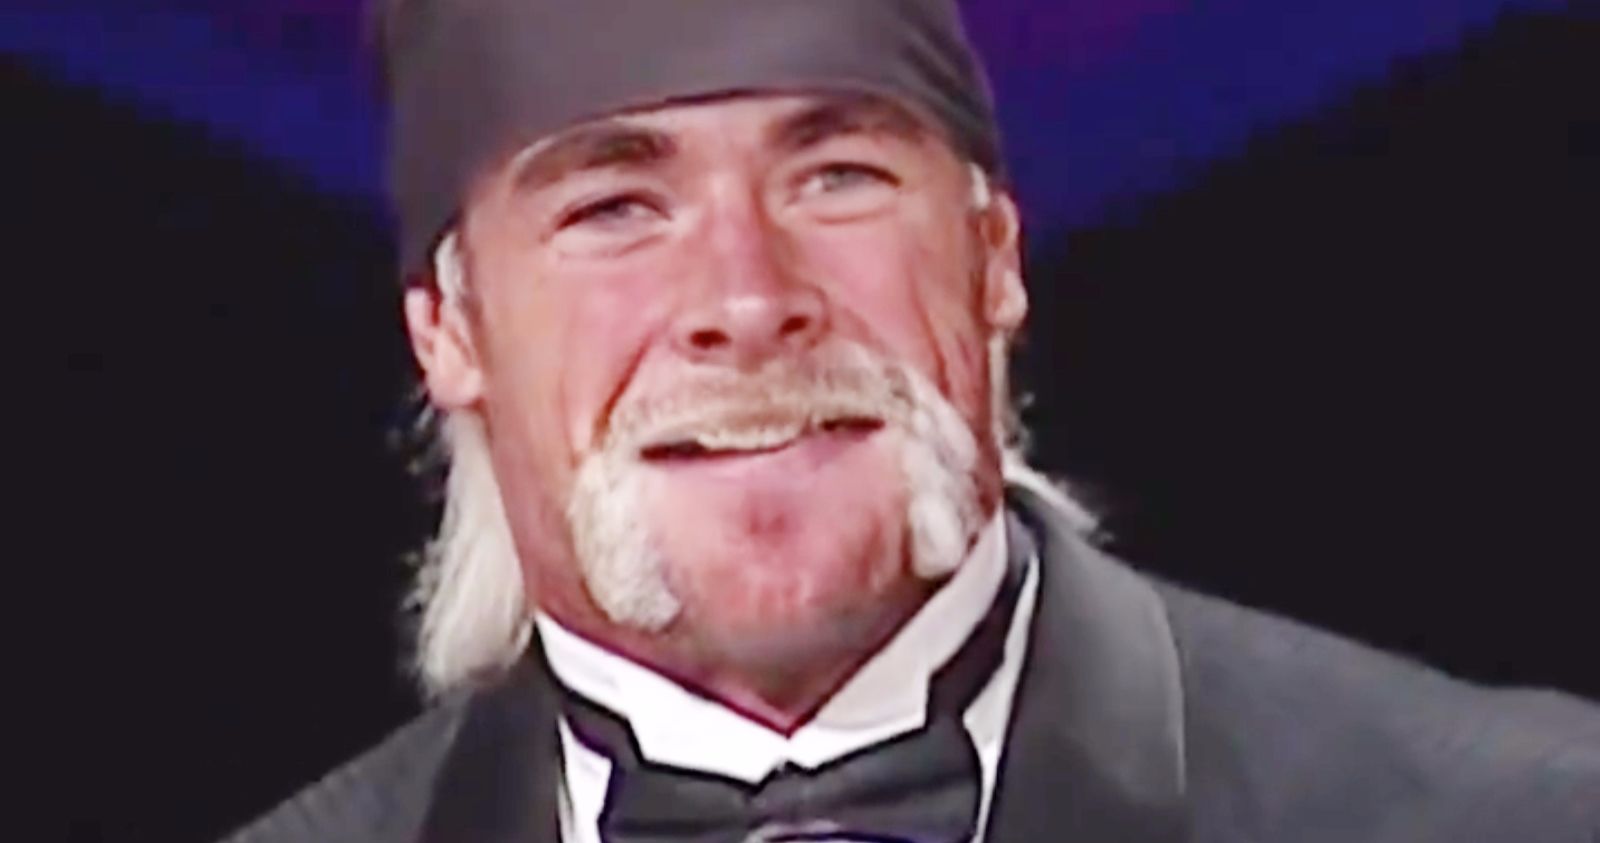 Hulkamania Deepfake Video Turns Chris Hemsworth Into a Convincing Hulk Hogan